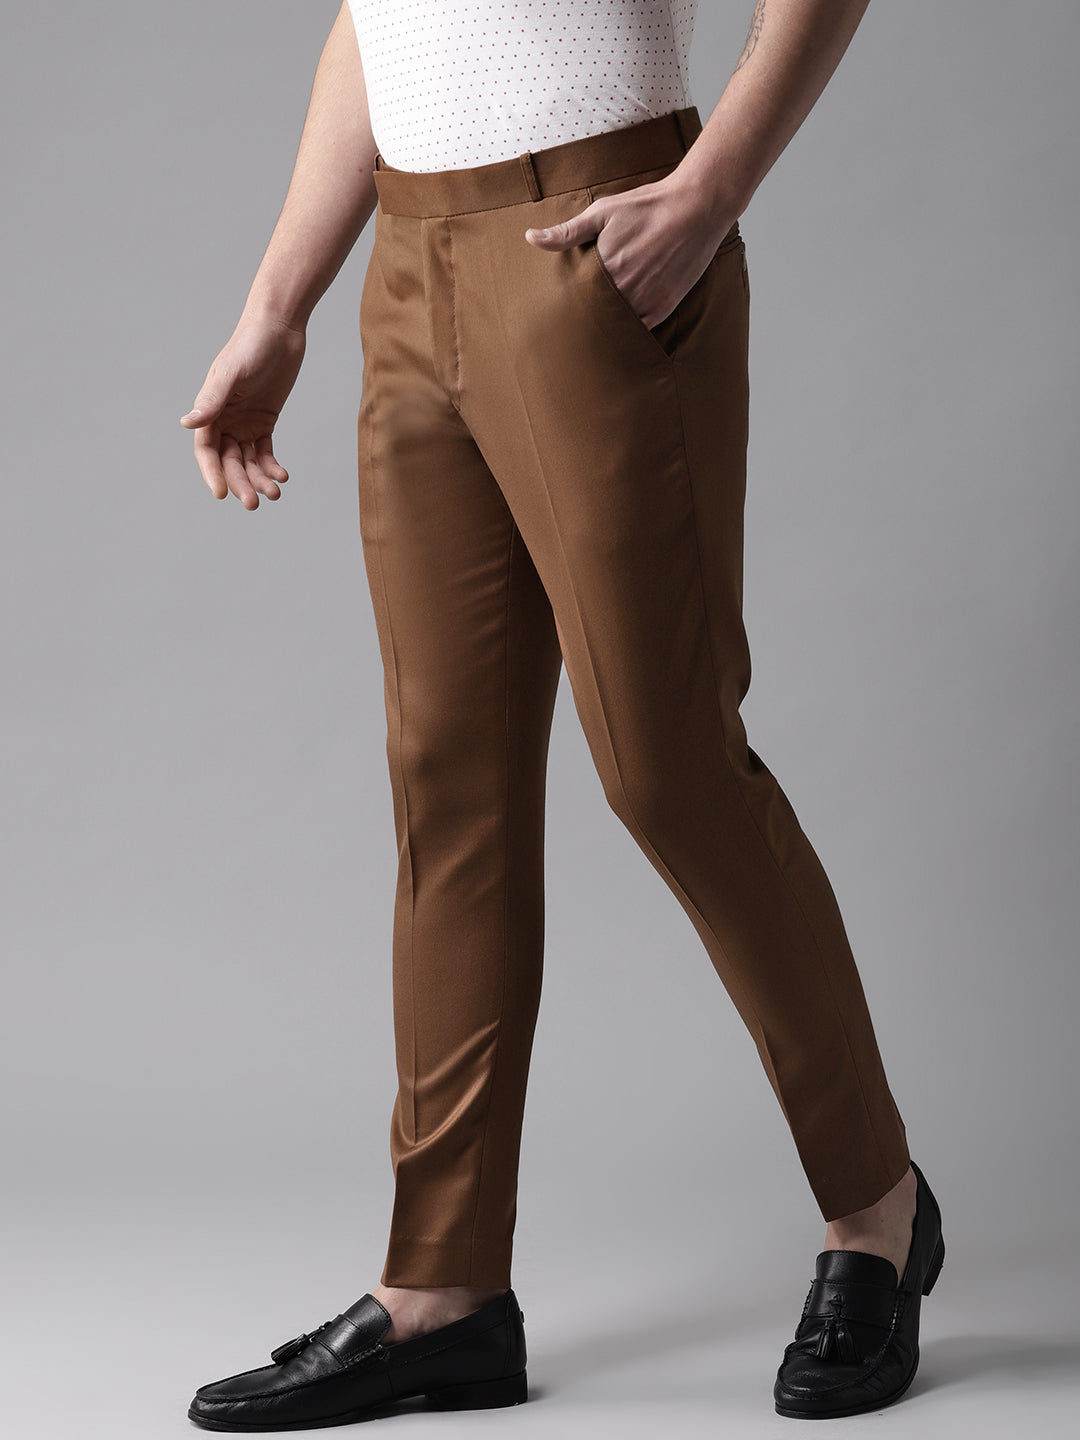 tklpehg Mens Cargo Pants Solid Color Fashion Long Pants Casual Cargo Loose  Sport Pockets Long Pants Trousers - Walmart.com